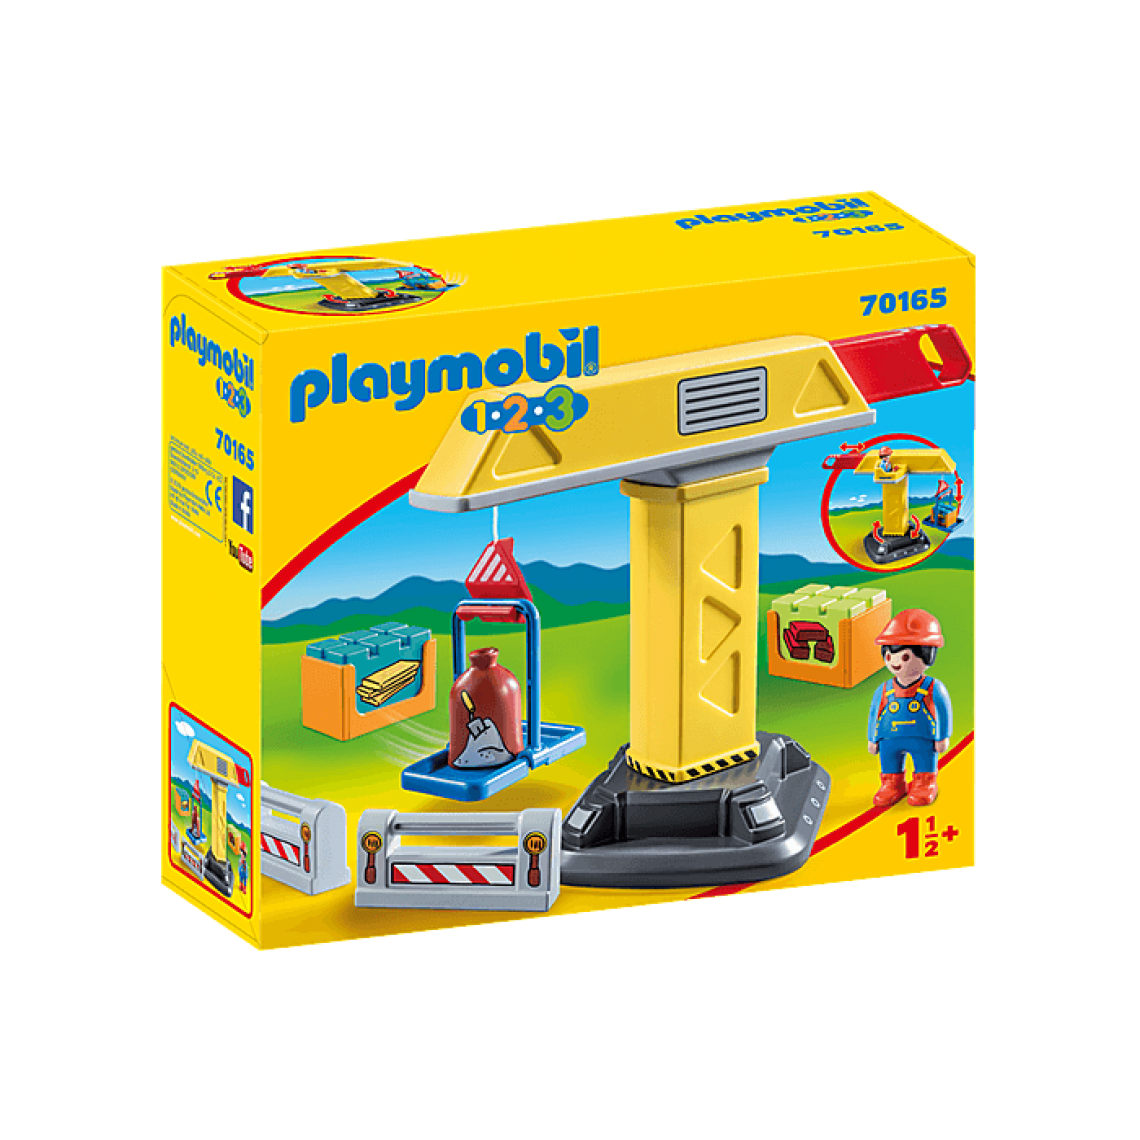 Playmobil - PLAYMOBIL 70165 - 1.2.3 - Grue de chantier - Playmobil